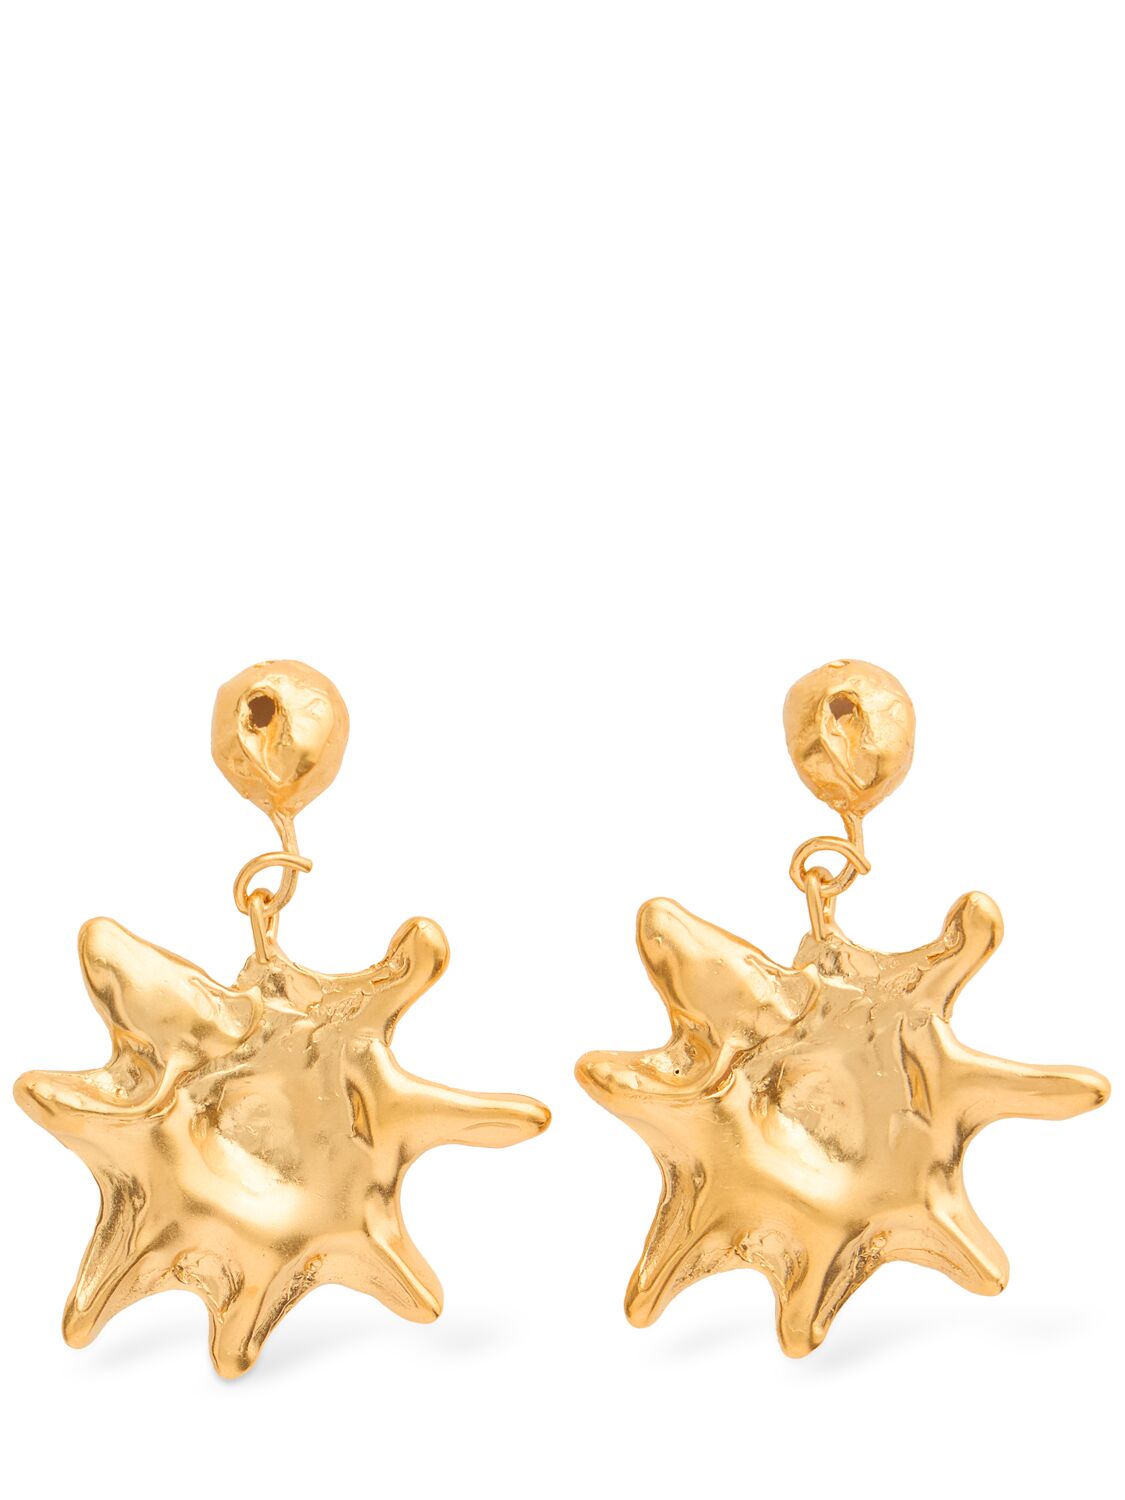 Simuero Astro Drop Earrings In Gold